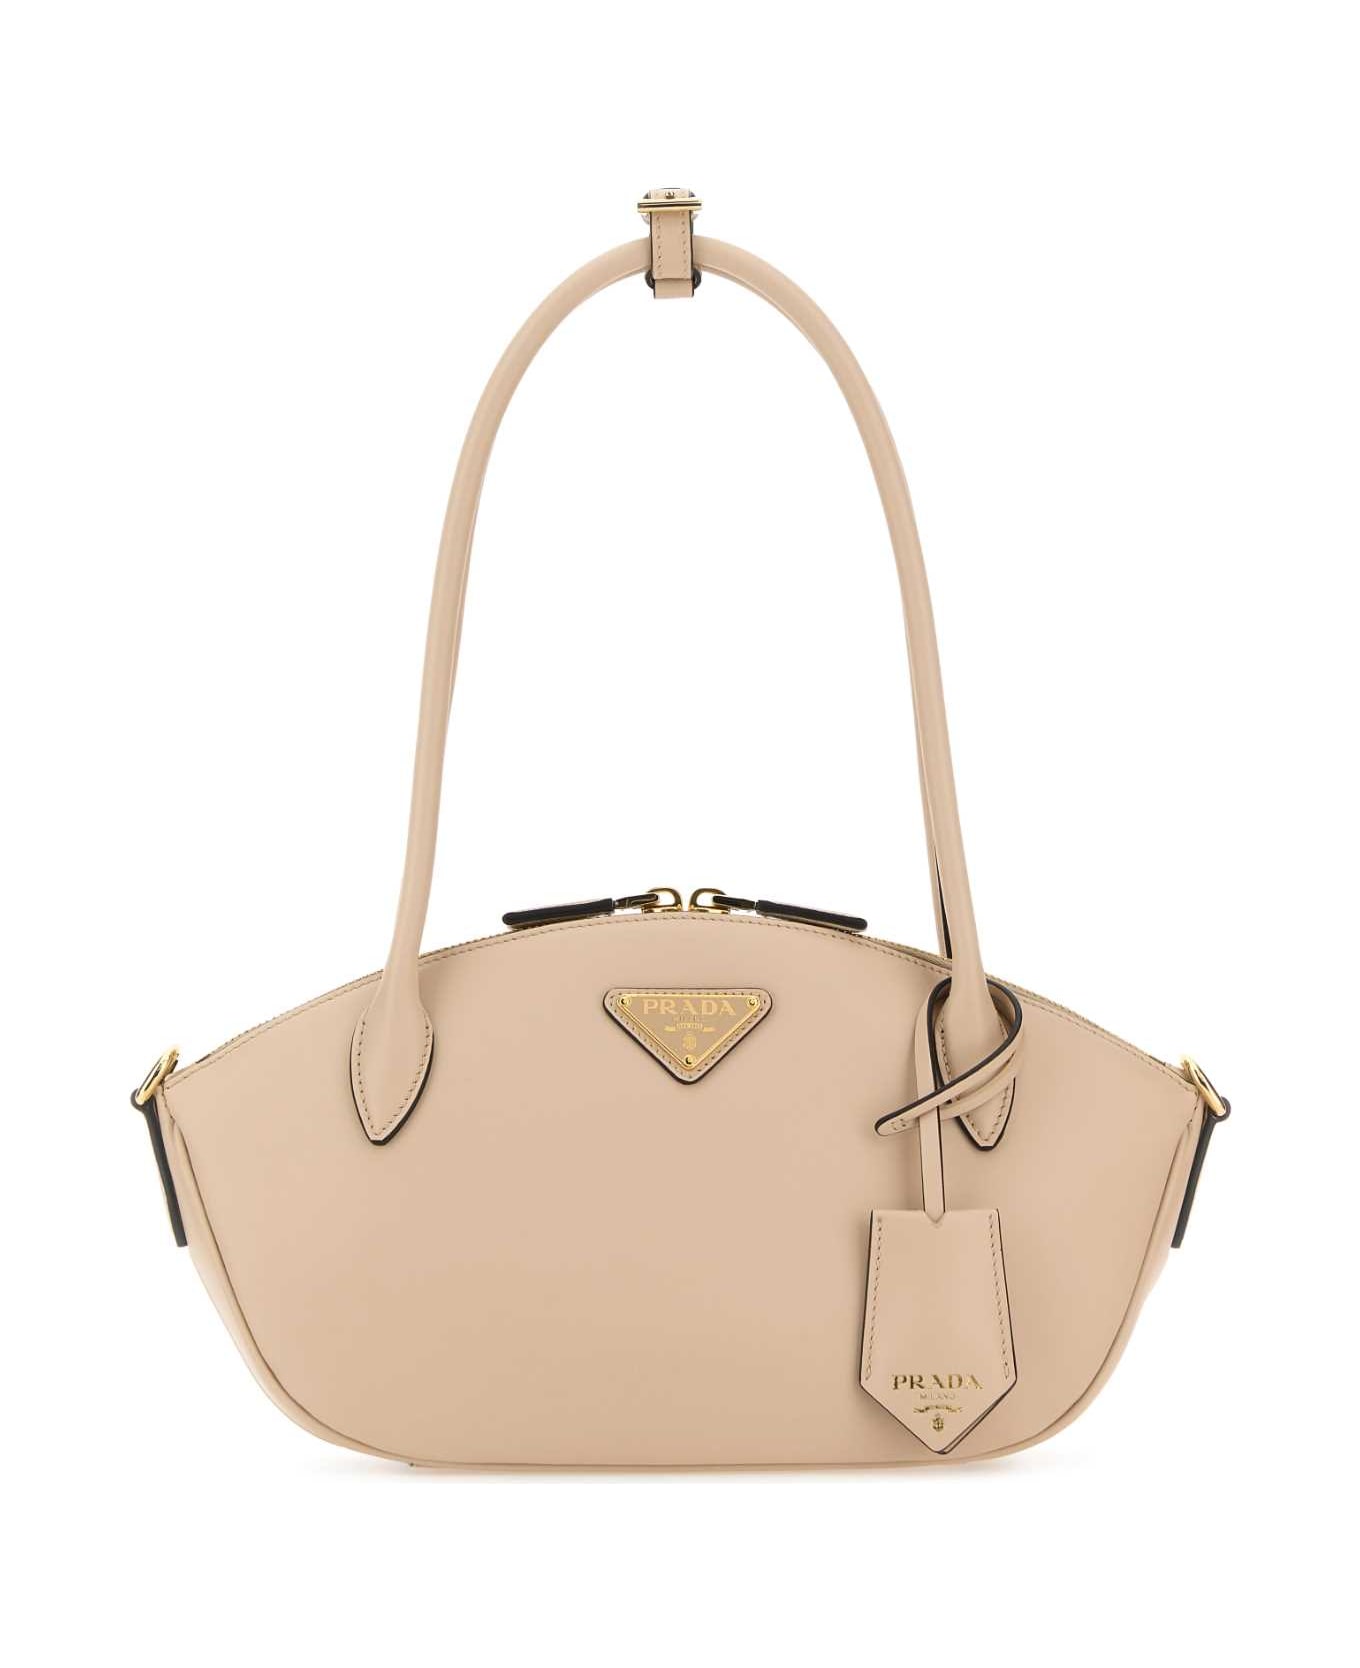 Prada Light Pink Leather Small Handbag - TRAVERTINON